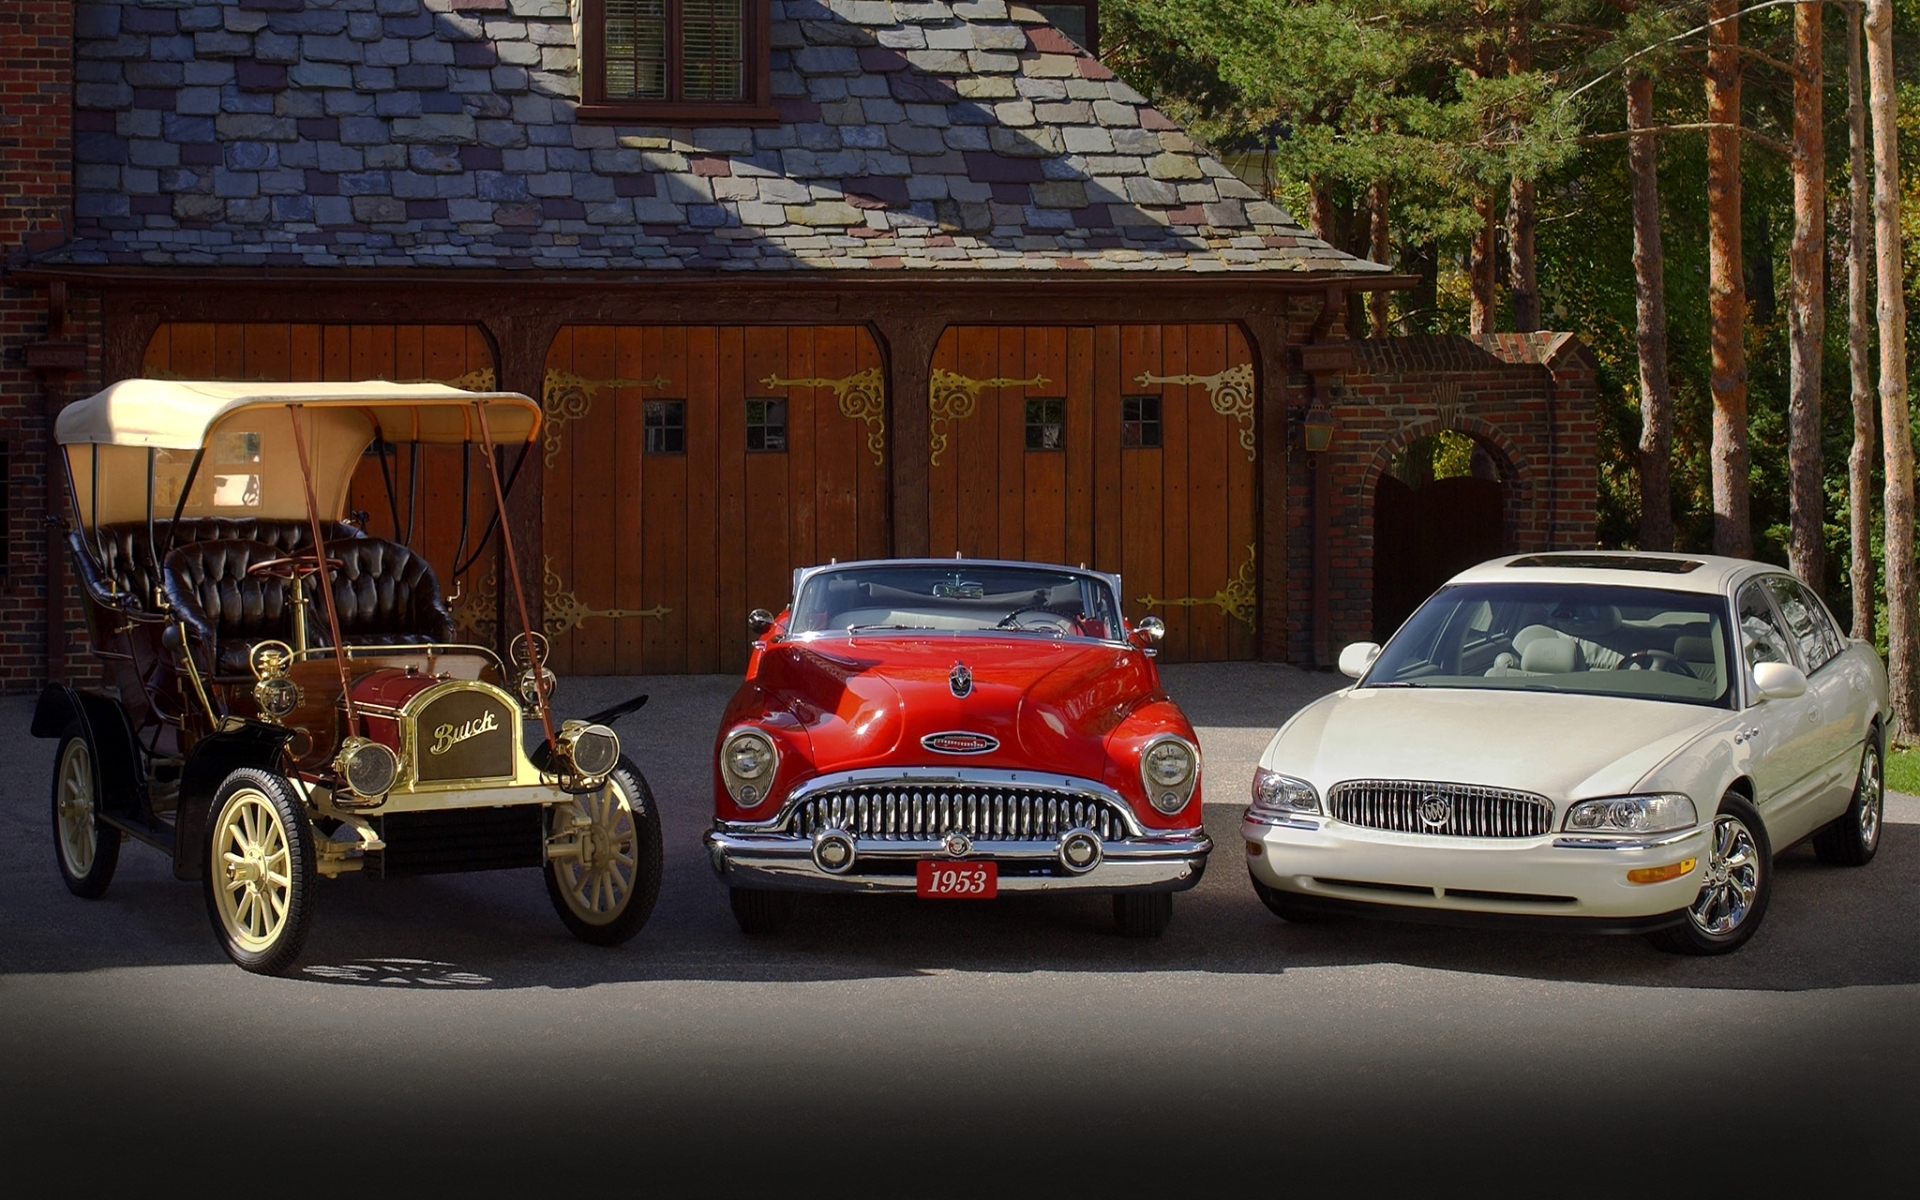 vehicles, buick, car, vintage